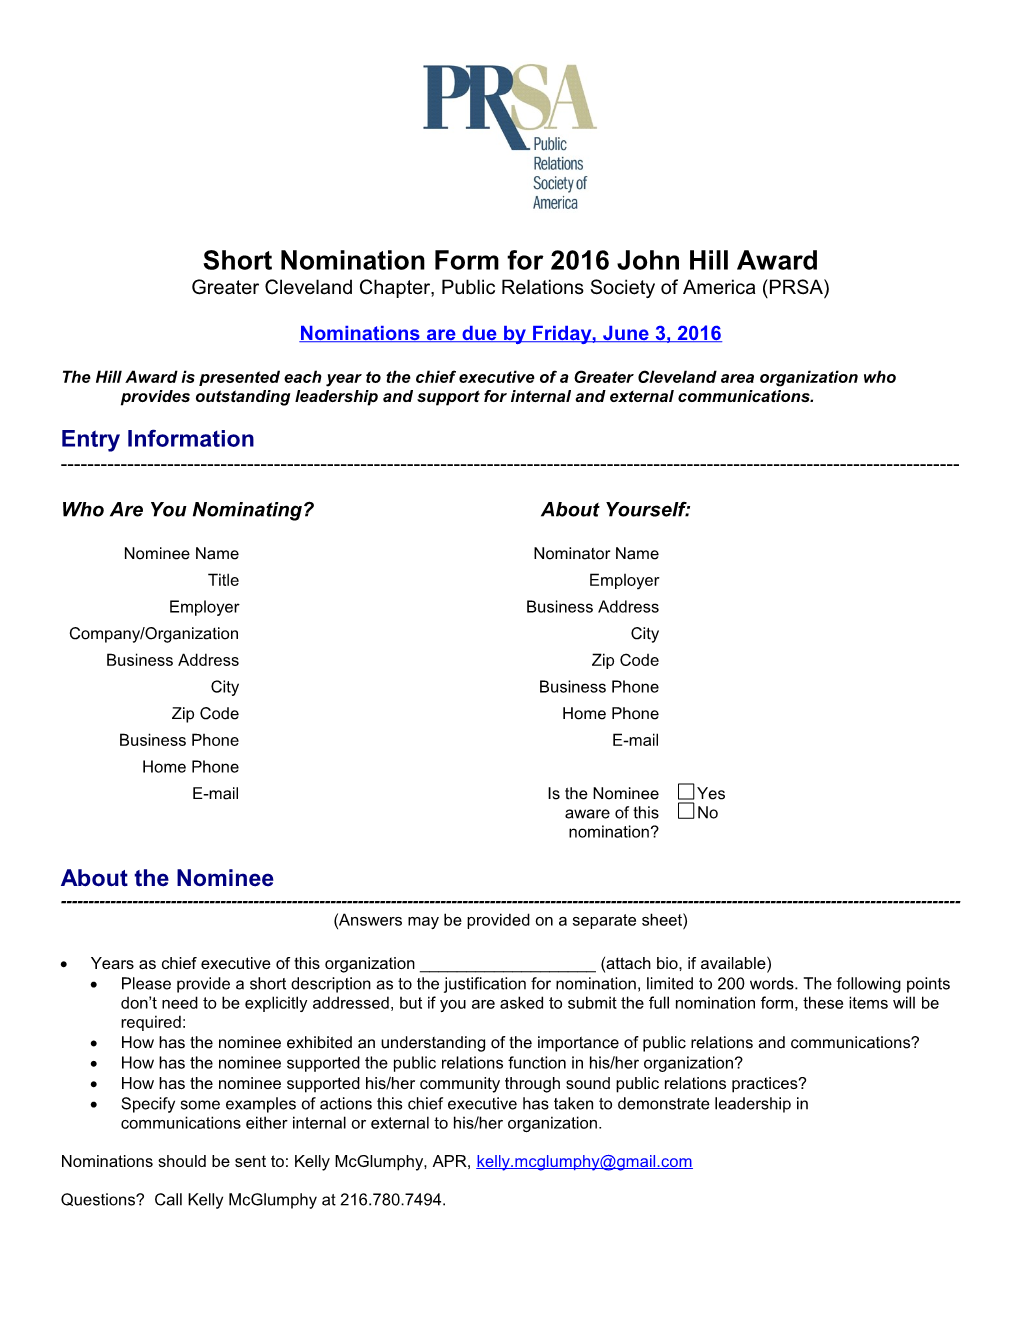 Nomination Form for 2001 John Hill Award